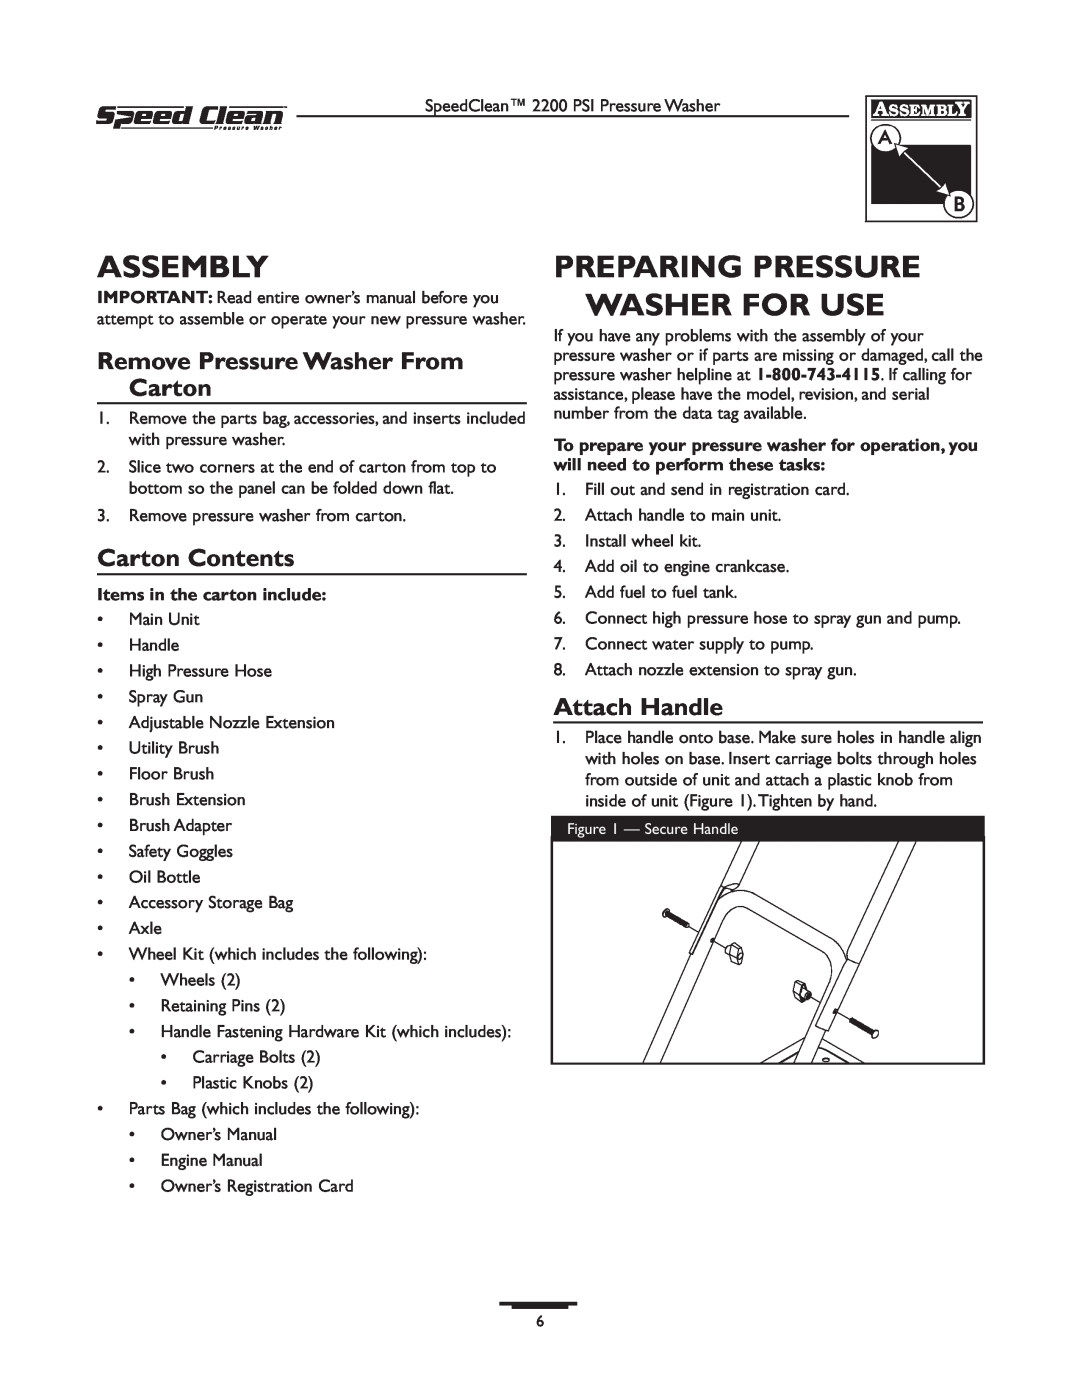 Briggs & Stratton 020239-1 Assembly, Preparing Pressure Washer For Use, Remove Pressure Washer From Carton, Attach Handle 